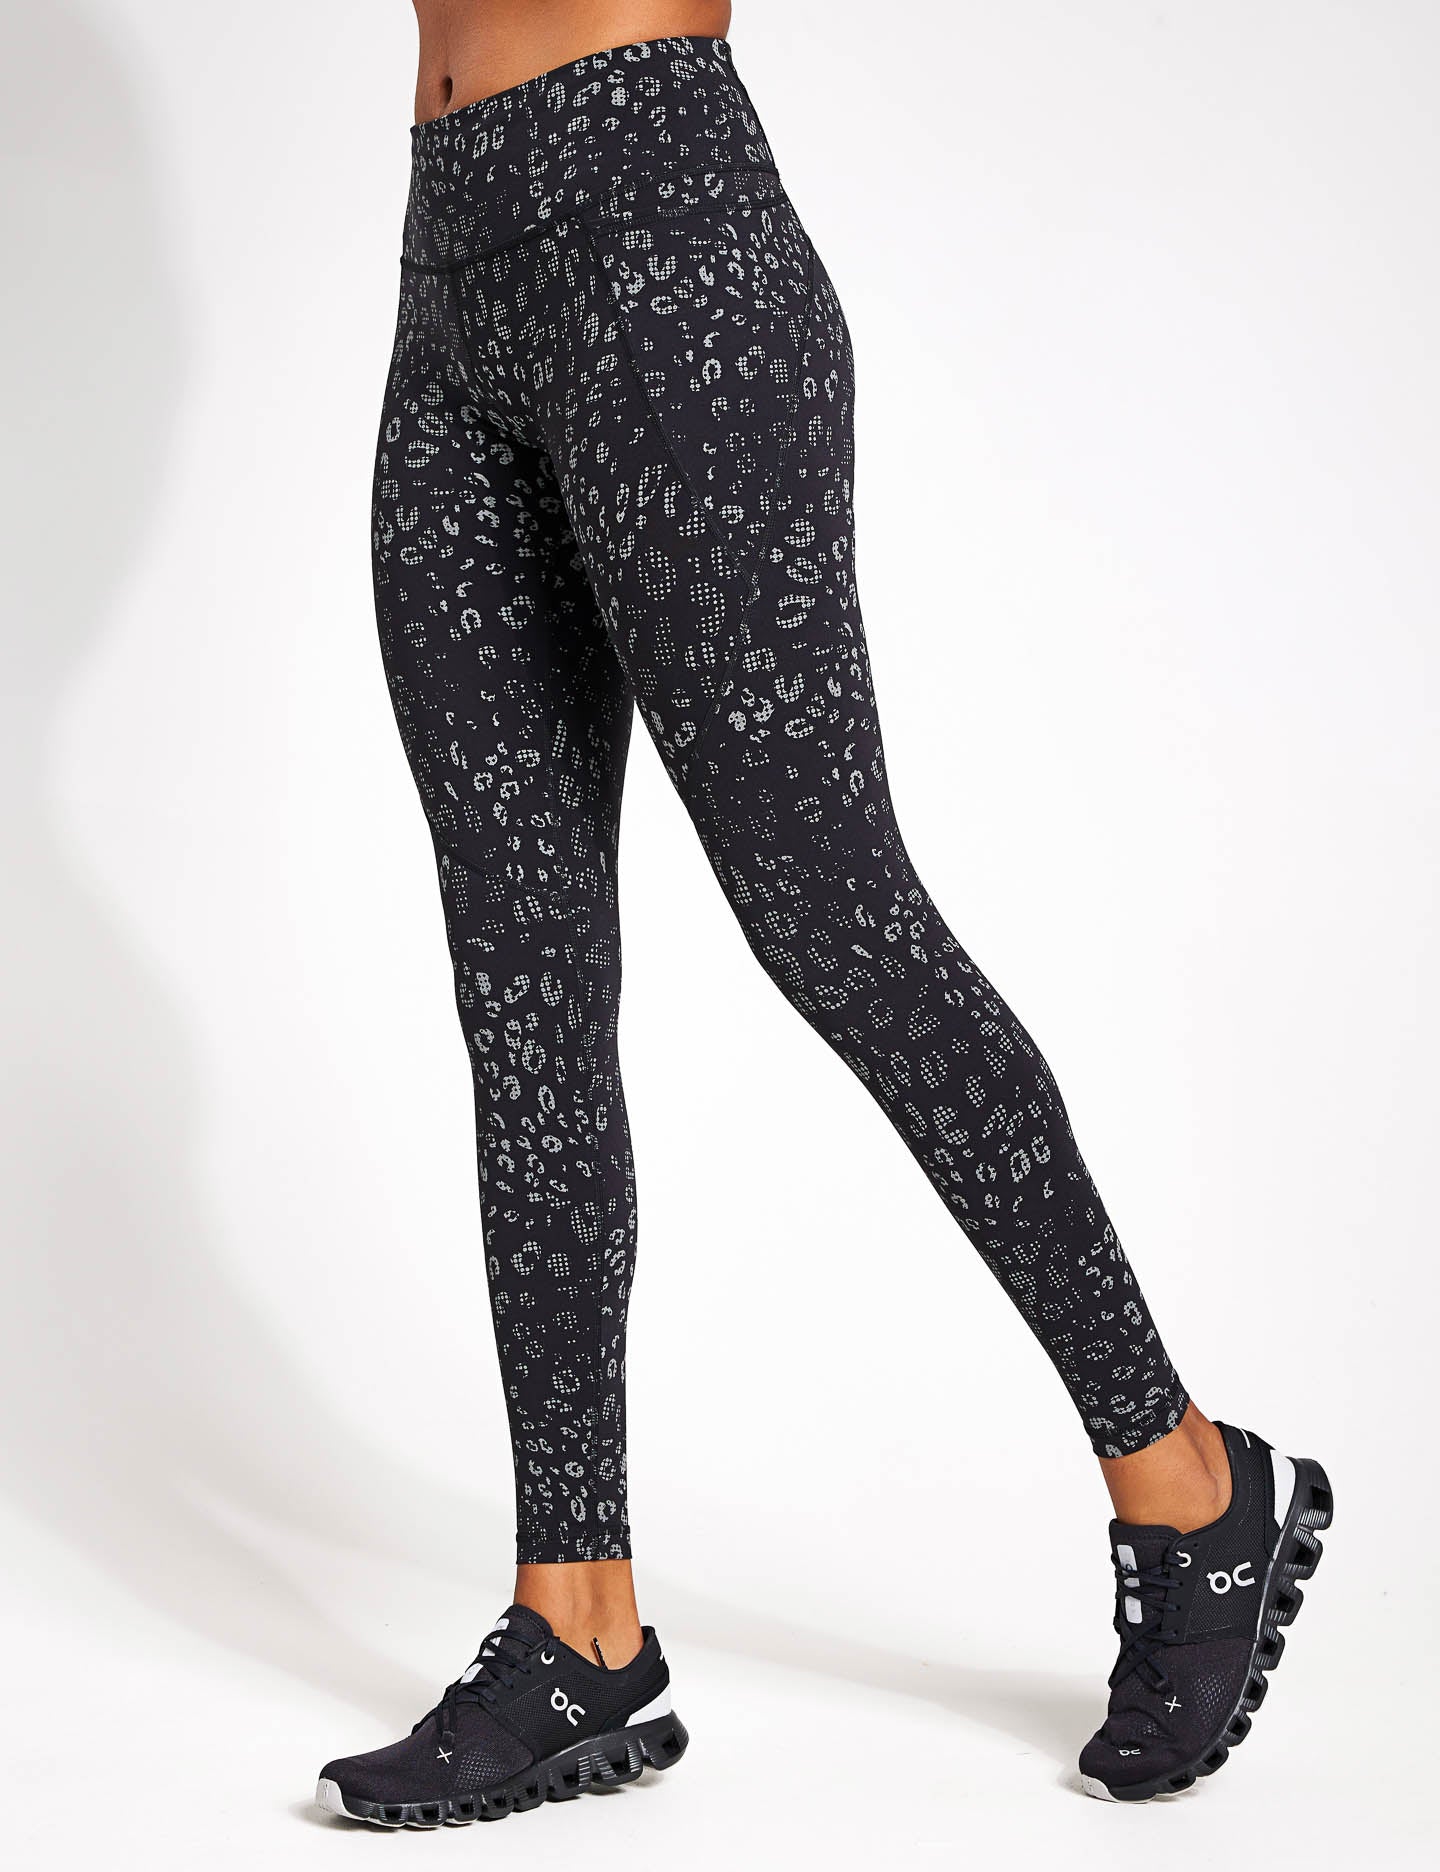 Power Reflective Workout Leggings - Black Reflective Leopard Print, Women's Leggings